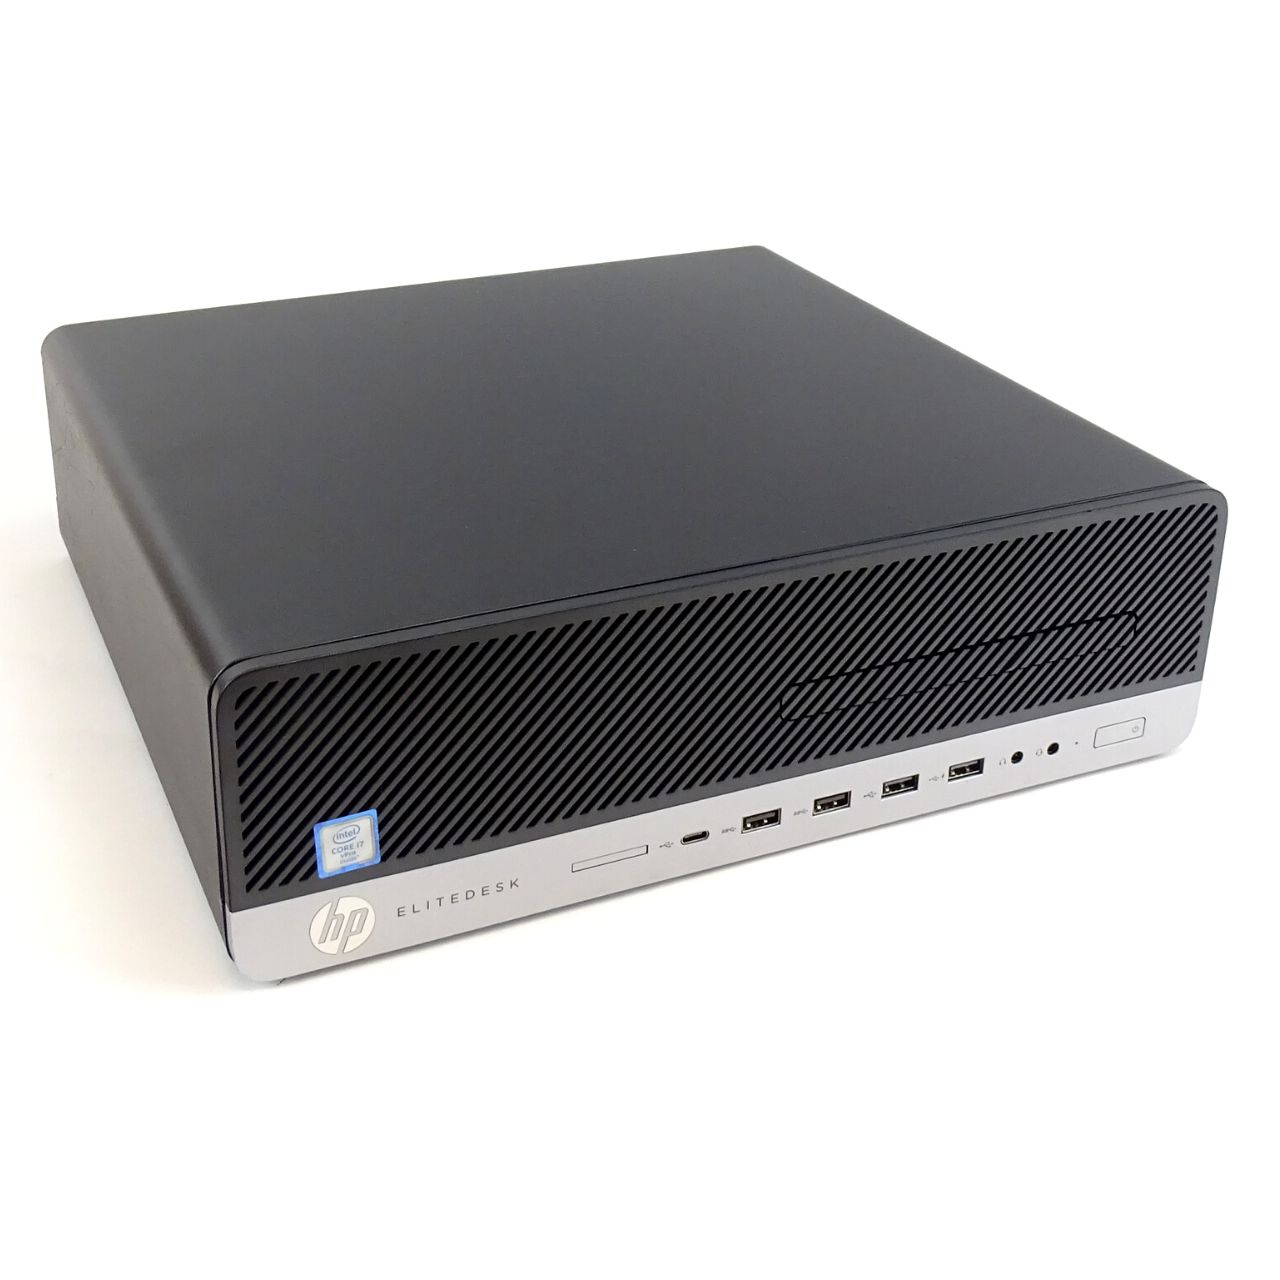 HP EliteDesk 800 G3 SFF - Small Form Factor - Intel Core i7 6700 @ 3,4 GHz - 8 GB - 256 GB SSD - DVD-ROM - Windows 10 Professional - Sehr gut